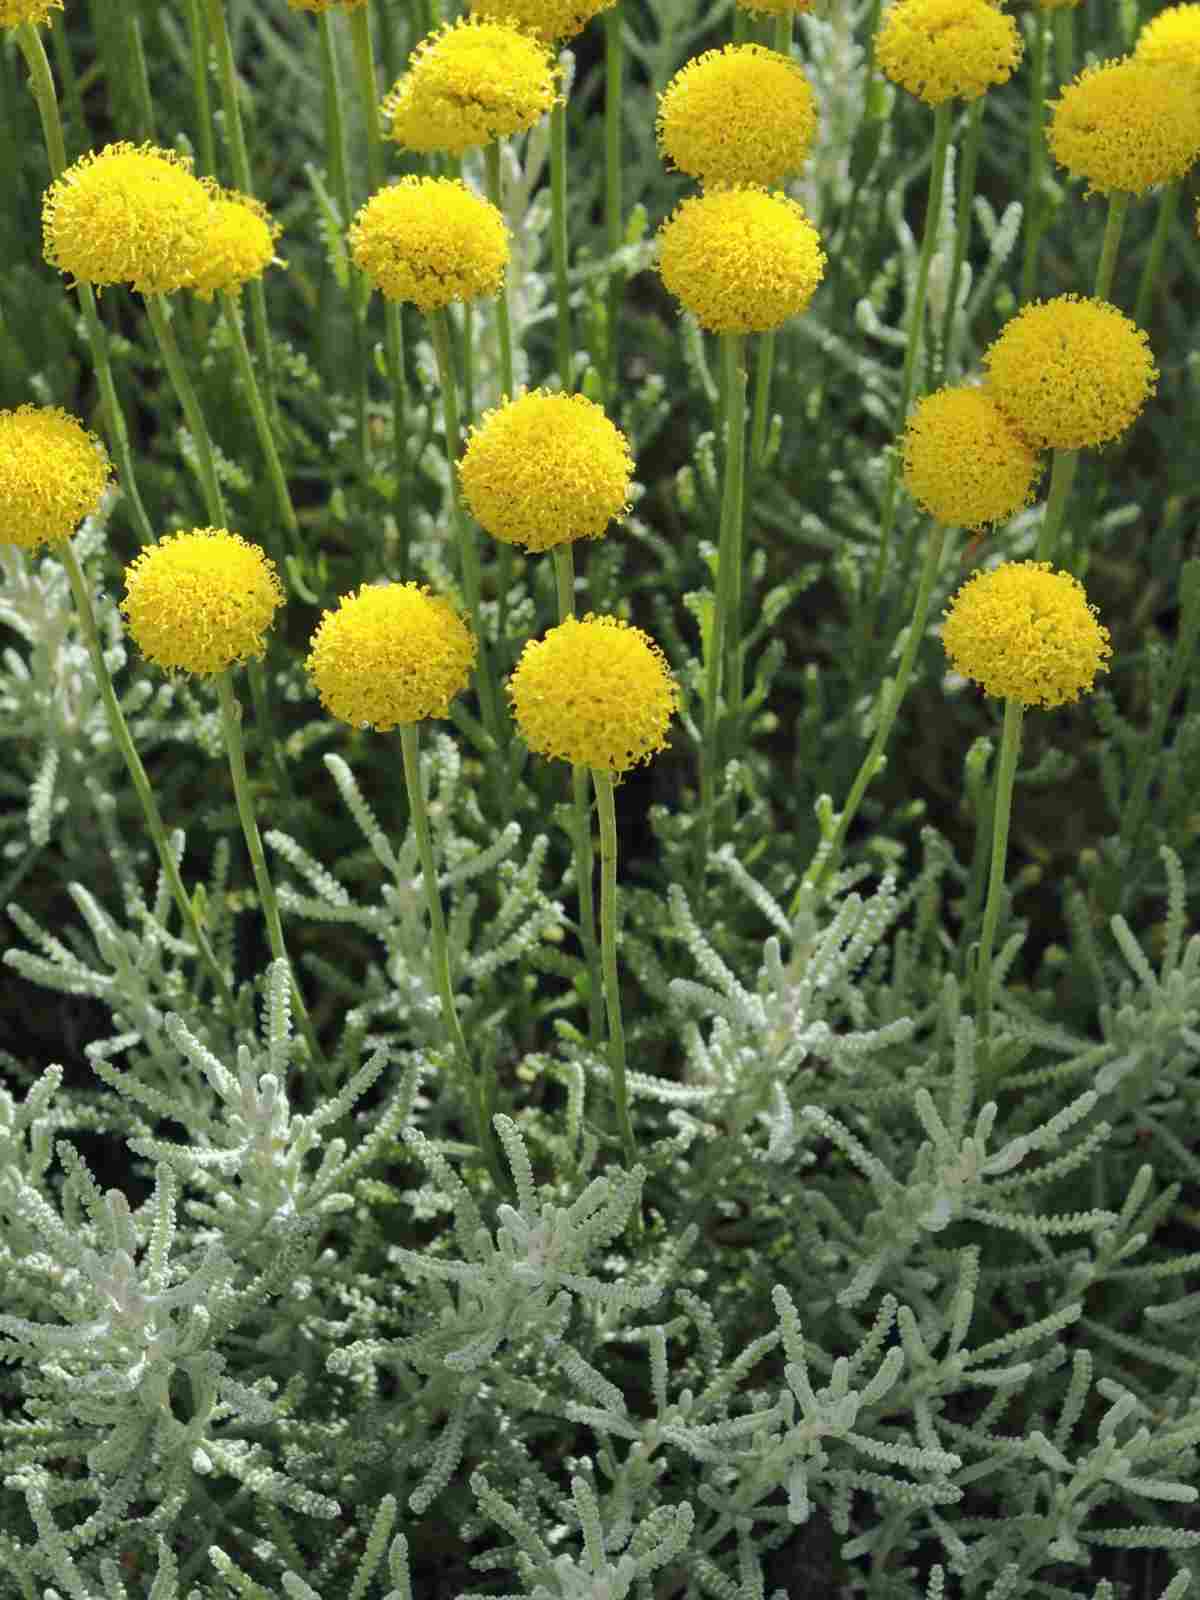 Silbergraues Heiligenkraut (Santolina) mit kugelförmigen Blüten in Gelb